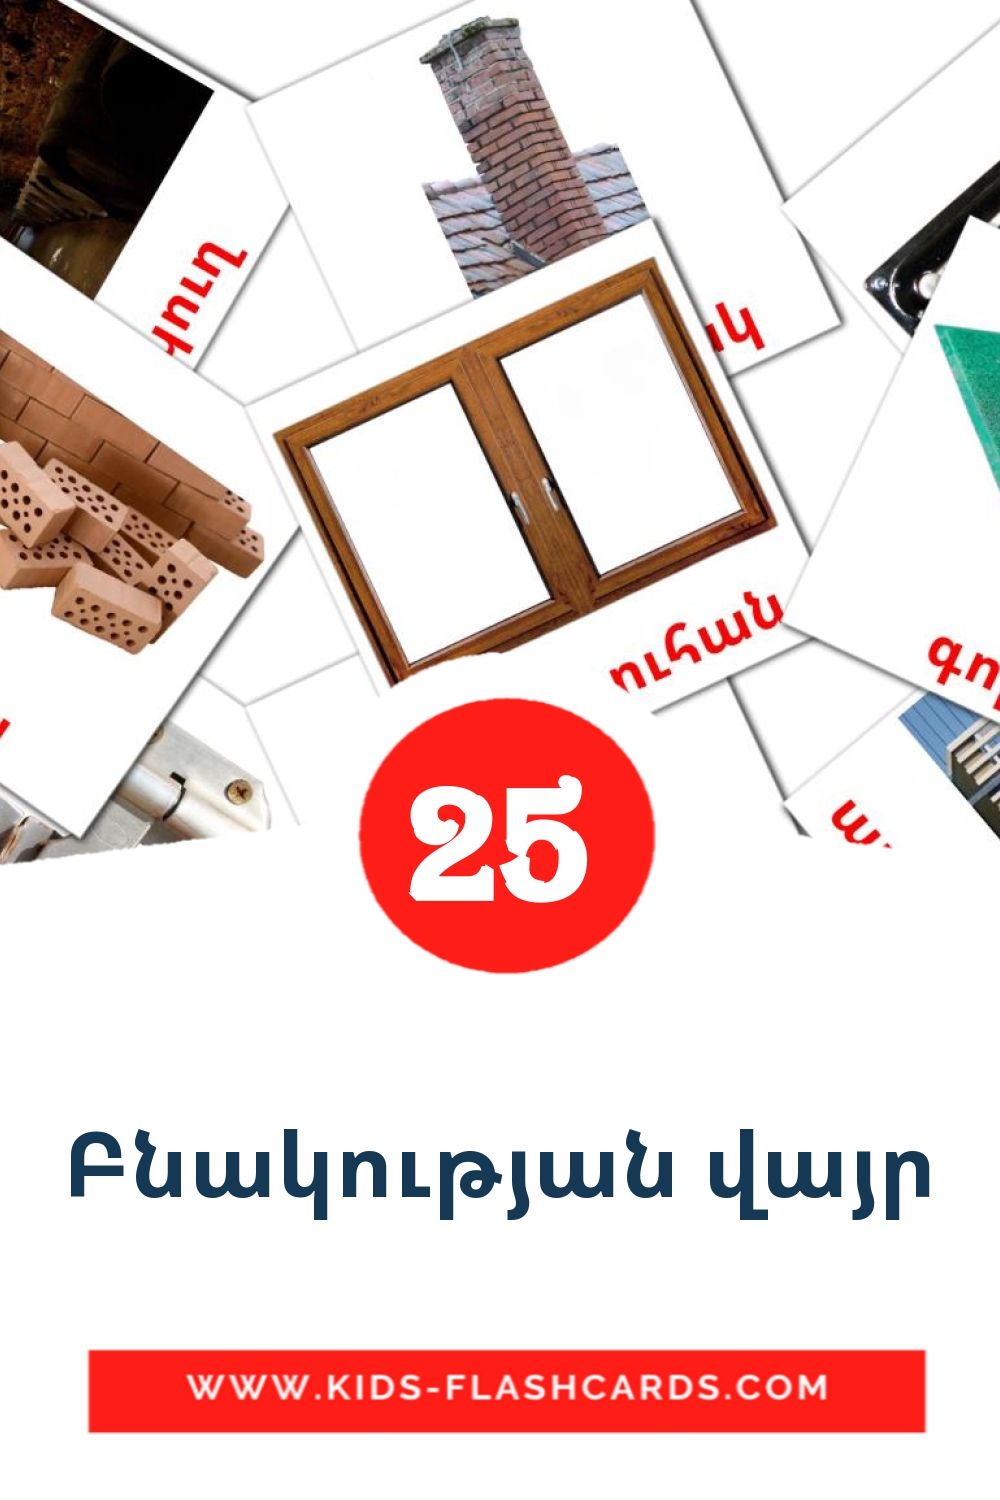 25 tarjetas didacticas de Բնակության վայր para el jardín de infancia en armenio